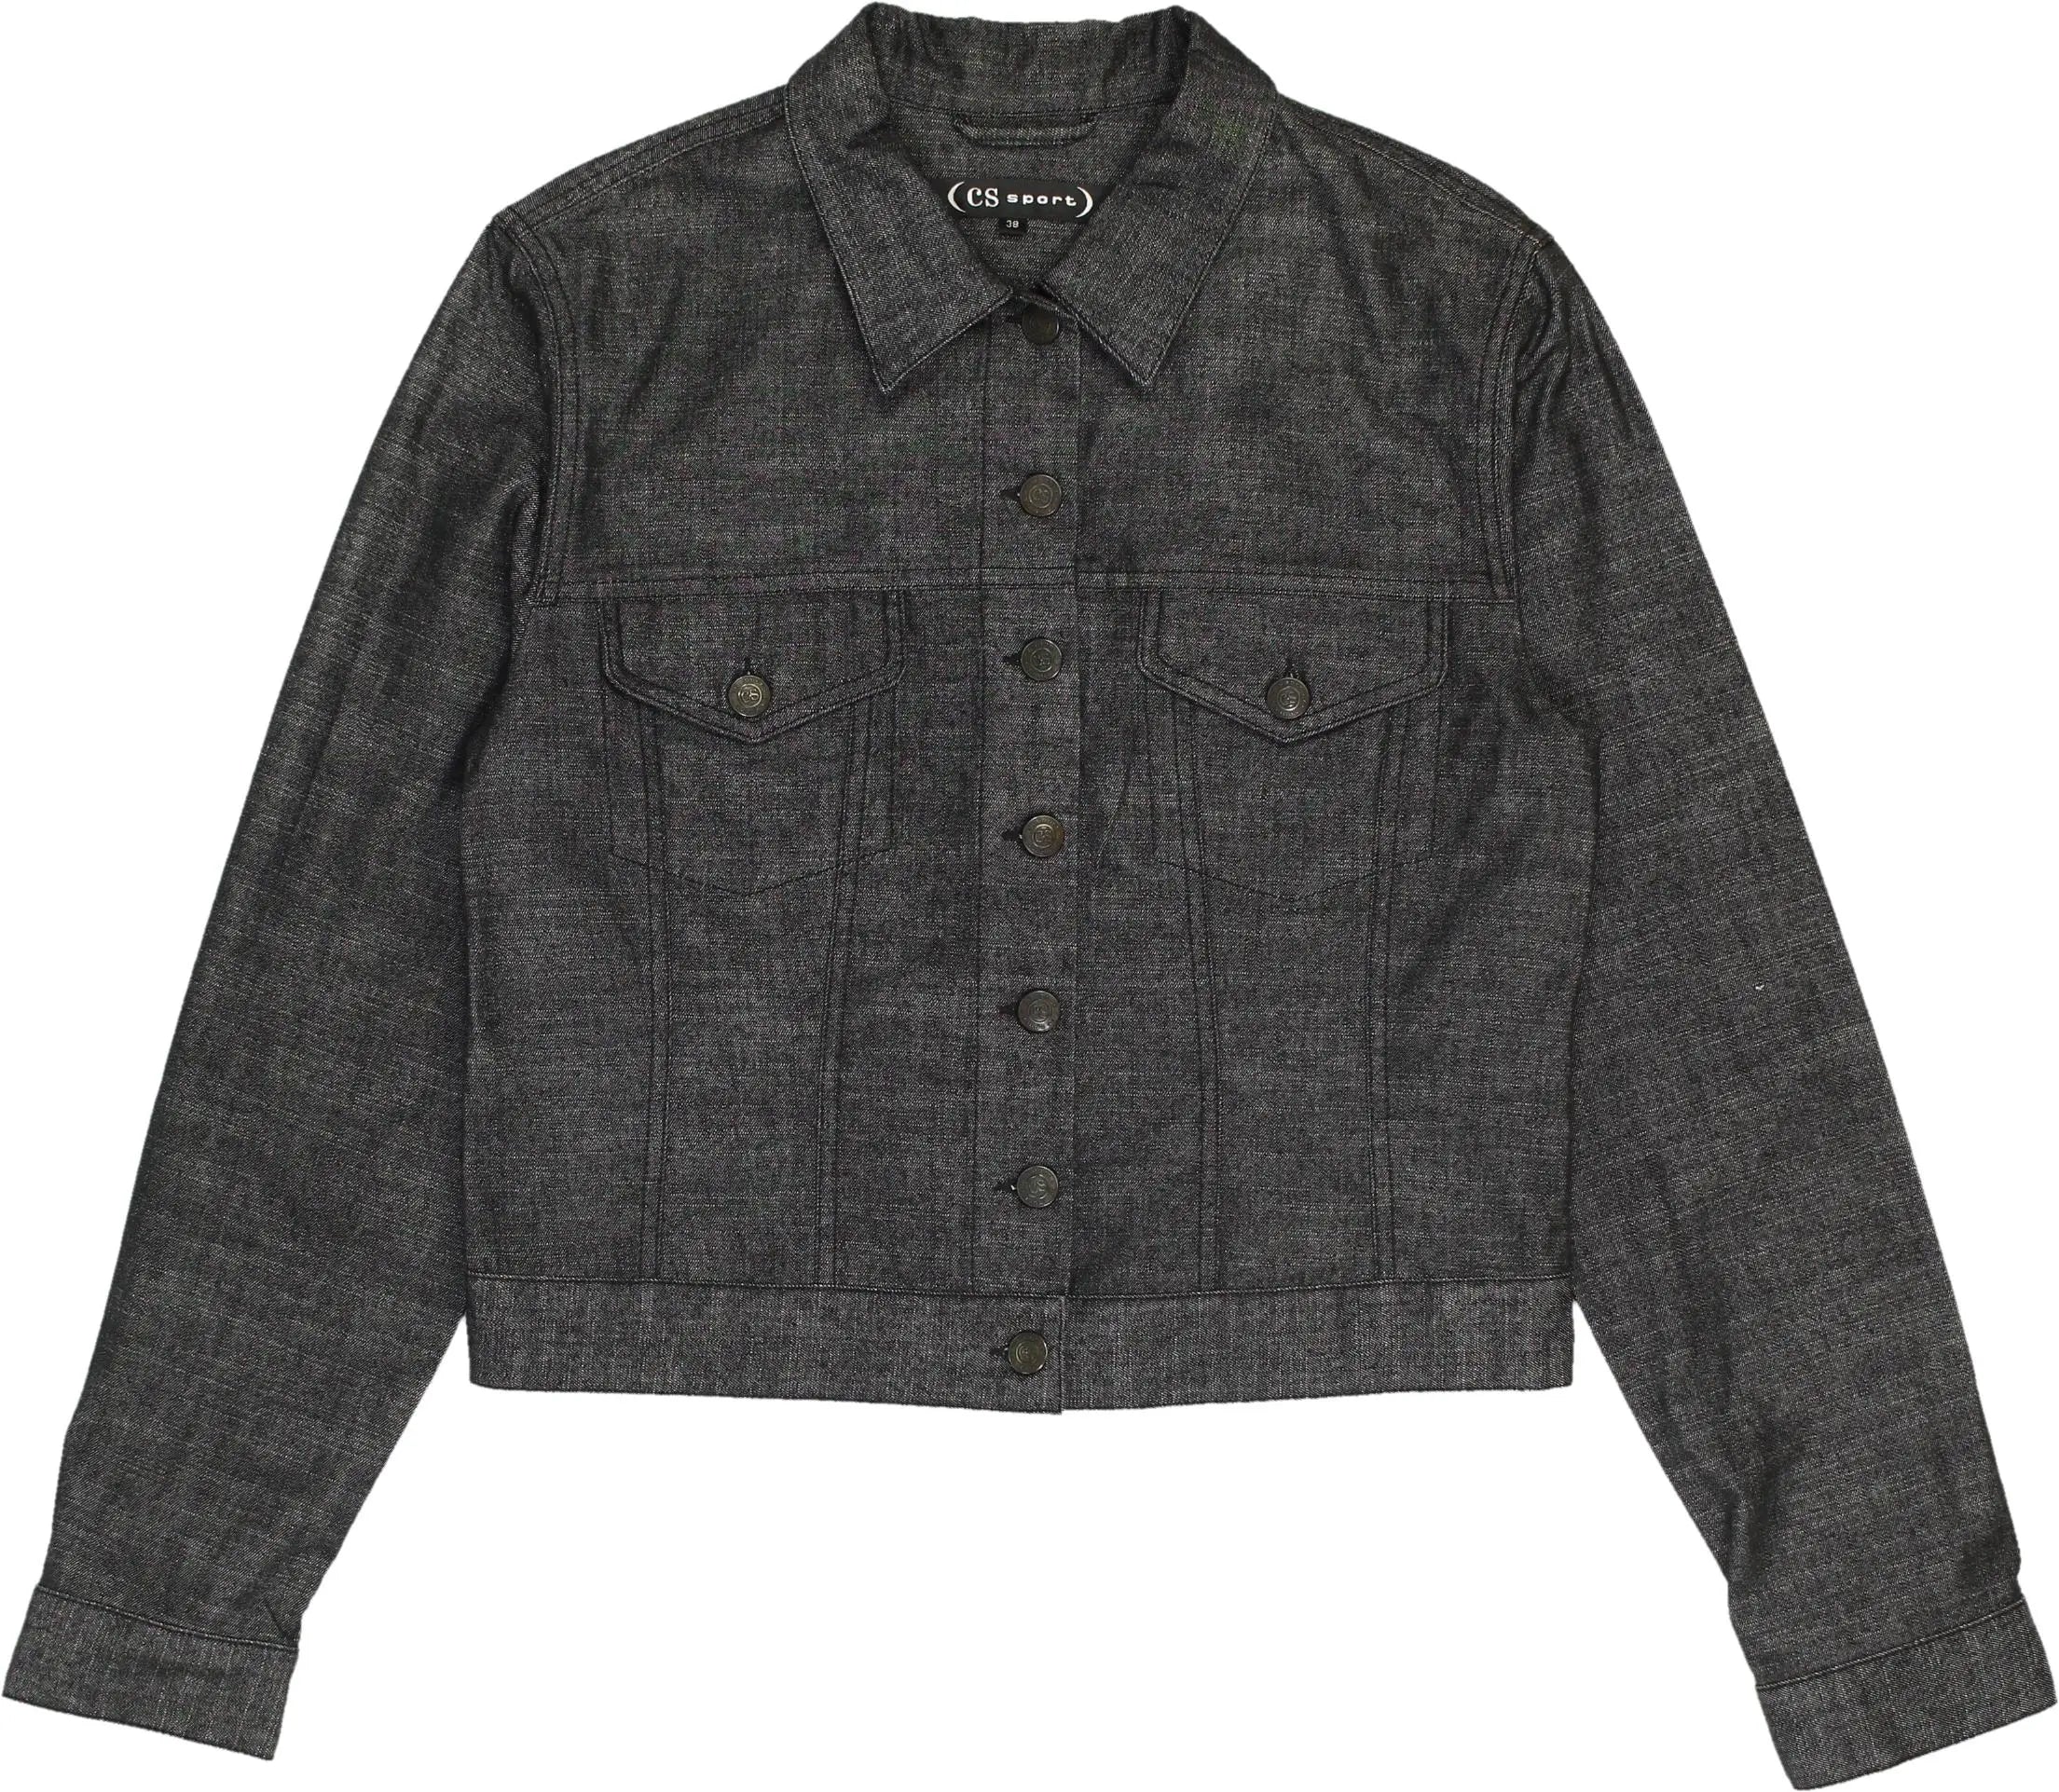 CS Sport - Grey Denim Jacket- ThriftTale.com - Vintage and second handclothing